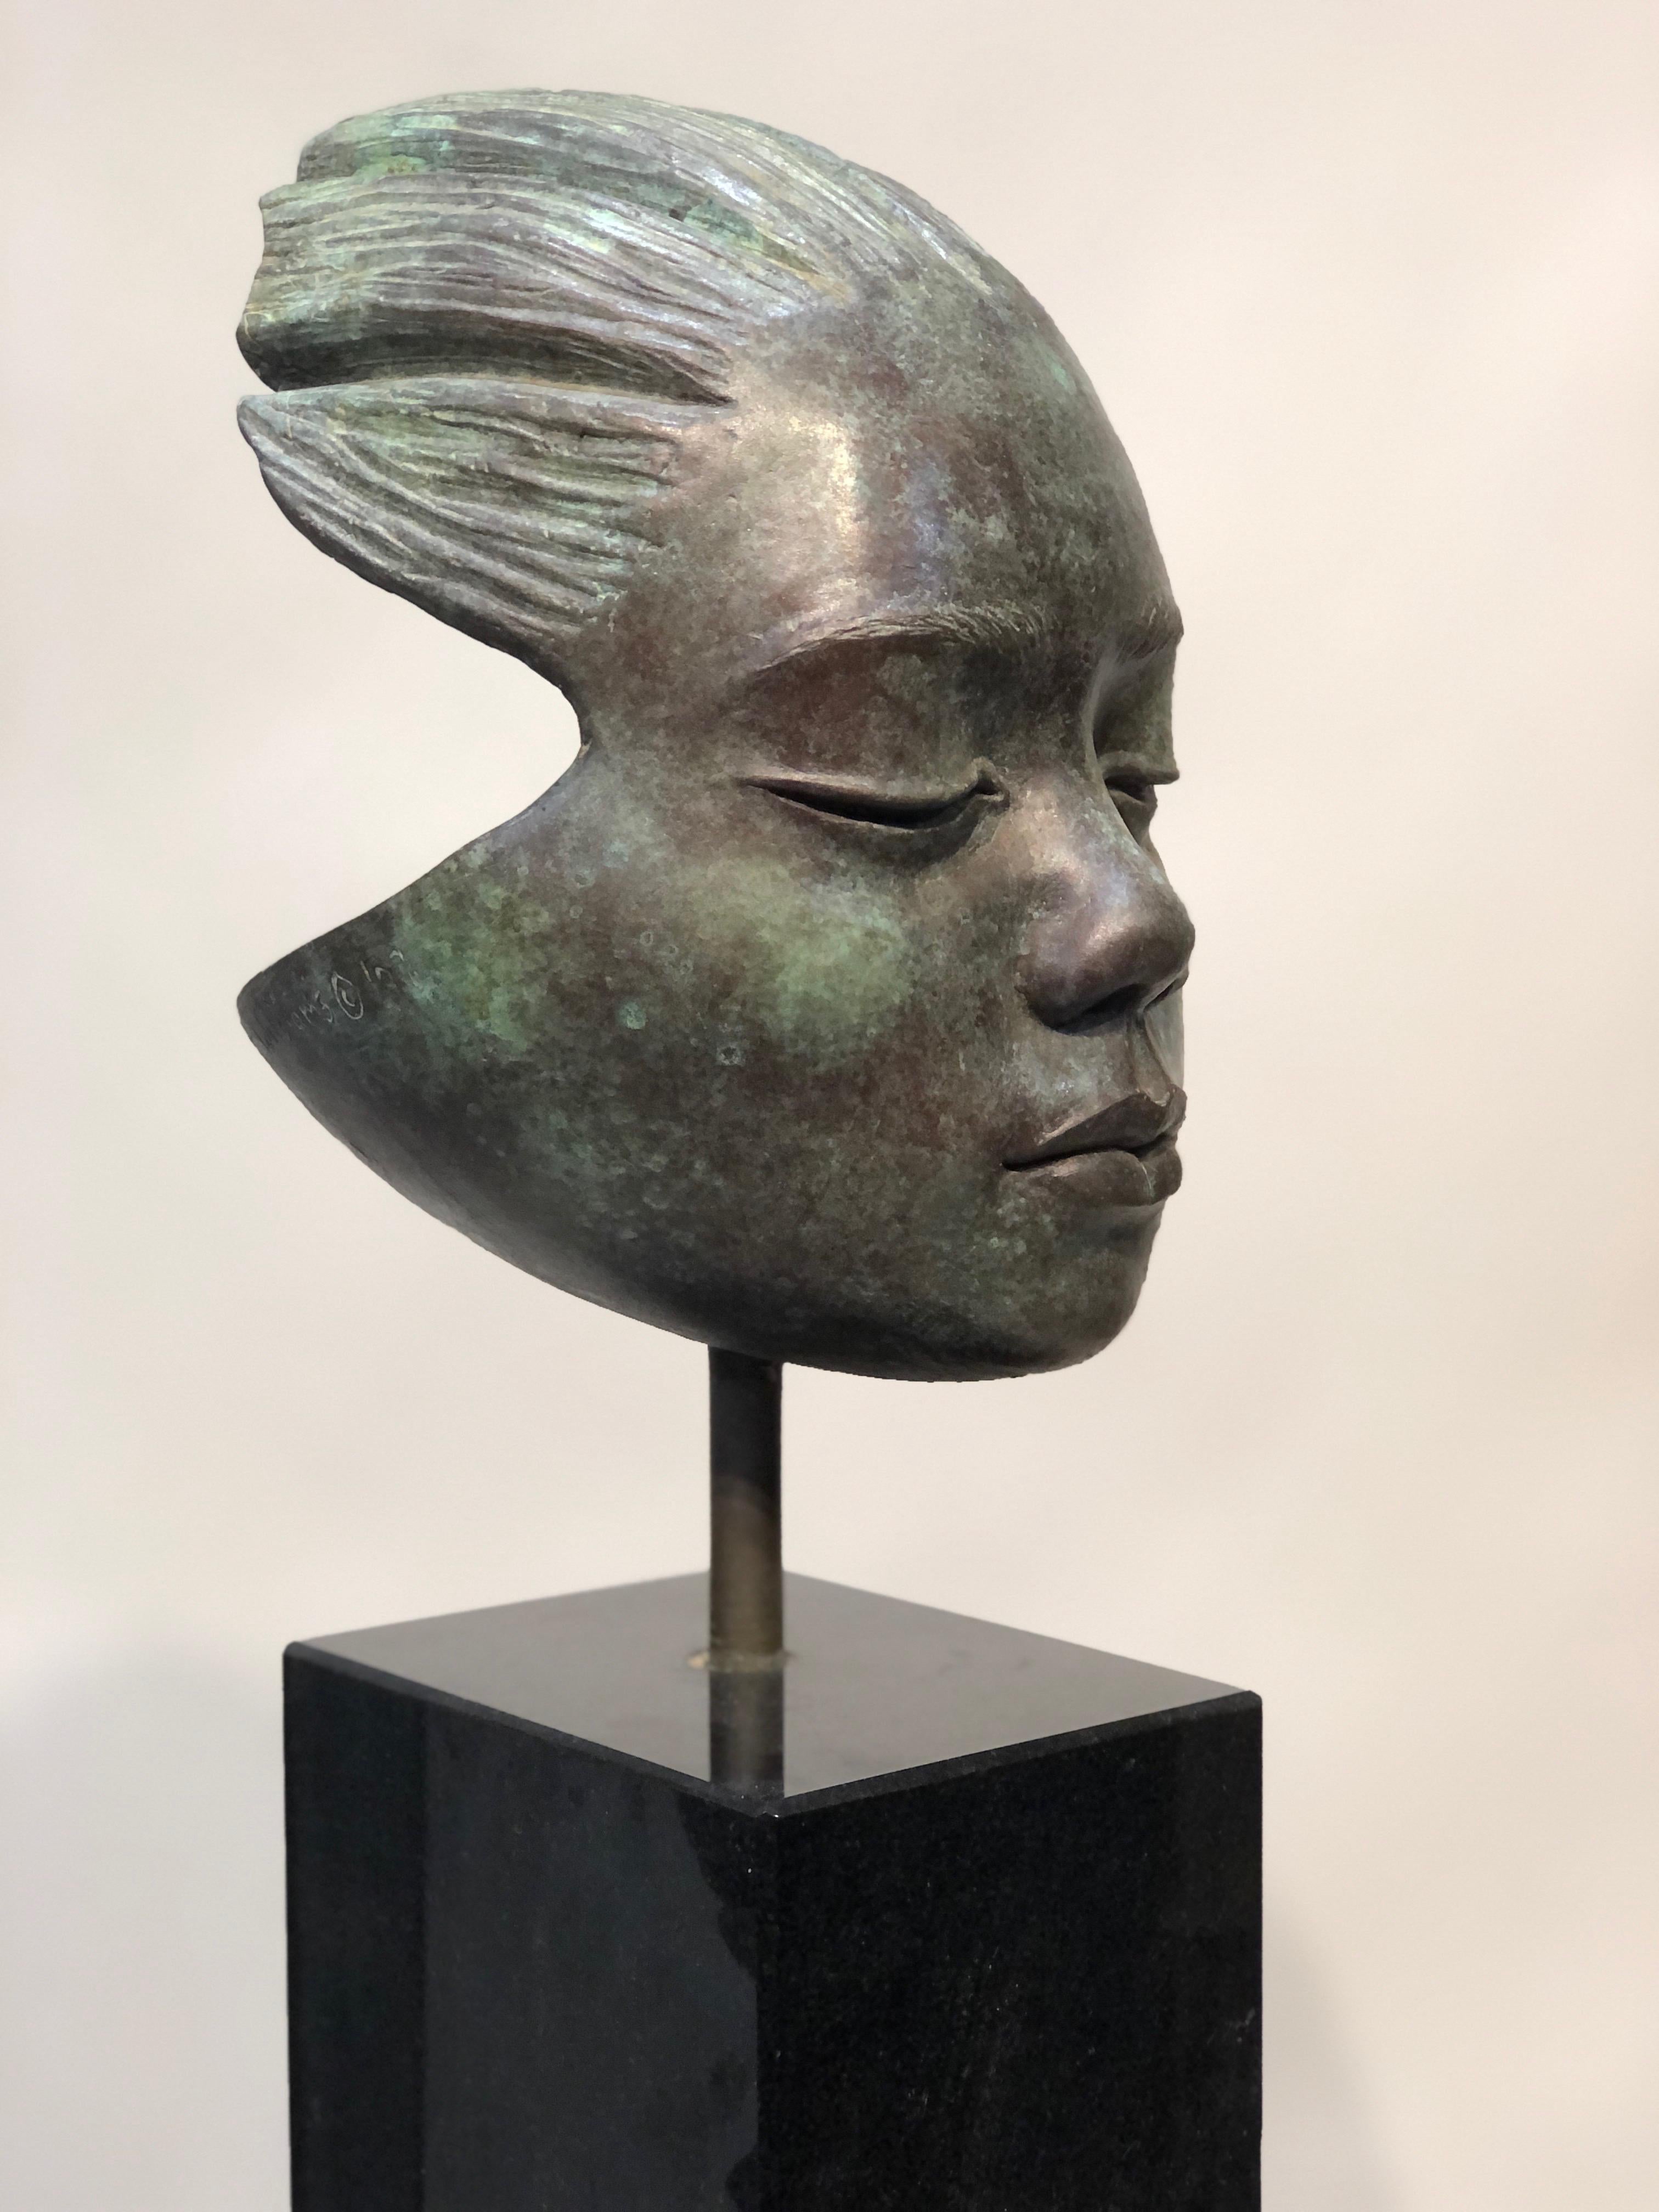 Escucha, escultura de bronce, retrato infantil, base de granito negro, pátina verde